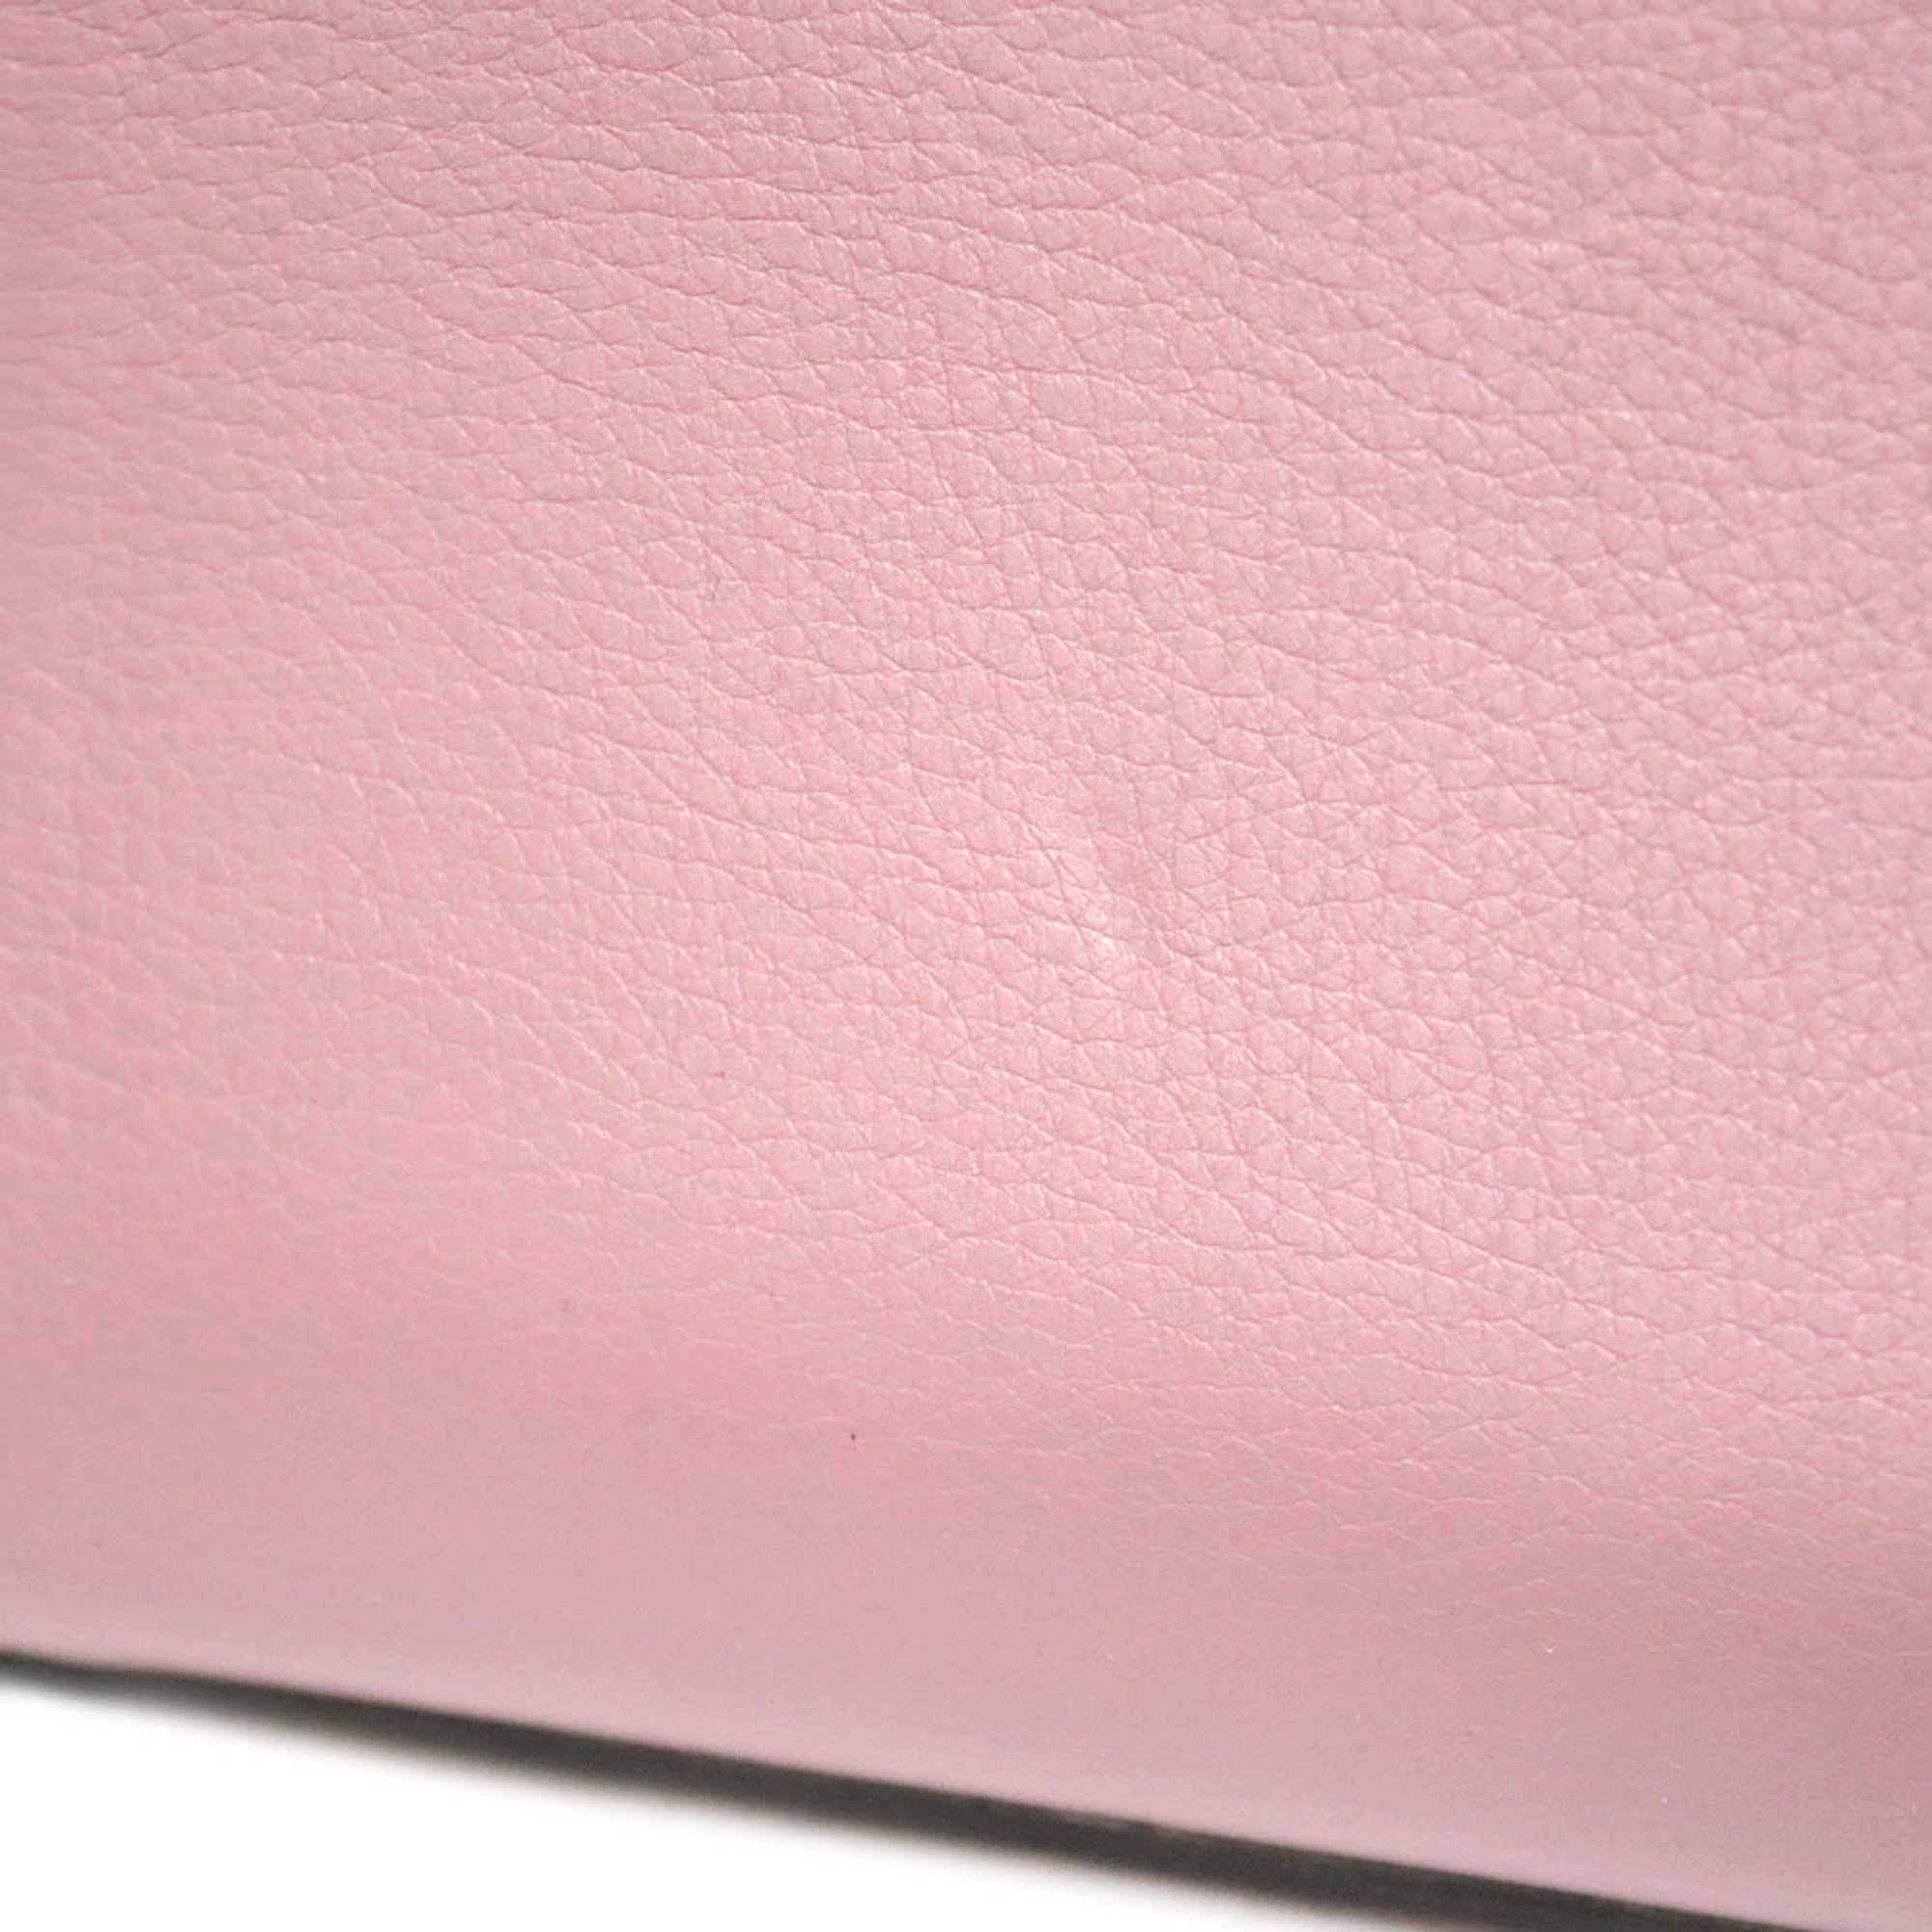 FENDI Fendi Shoulder Bag Pink Women's Leather